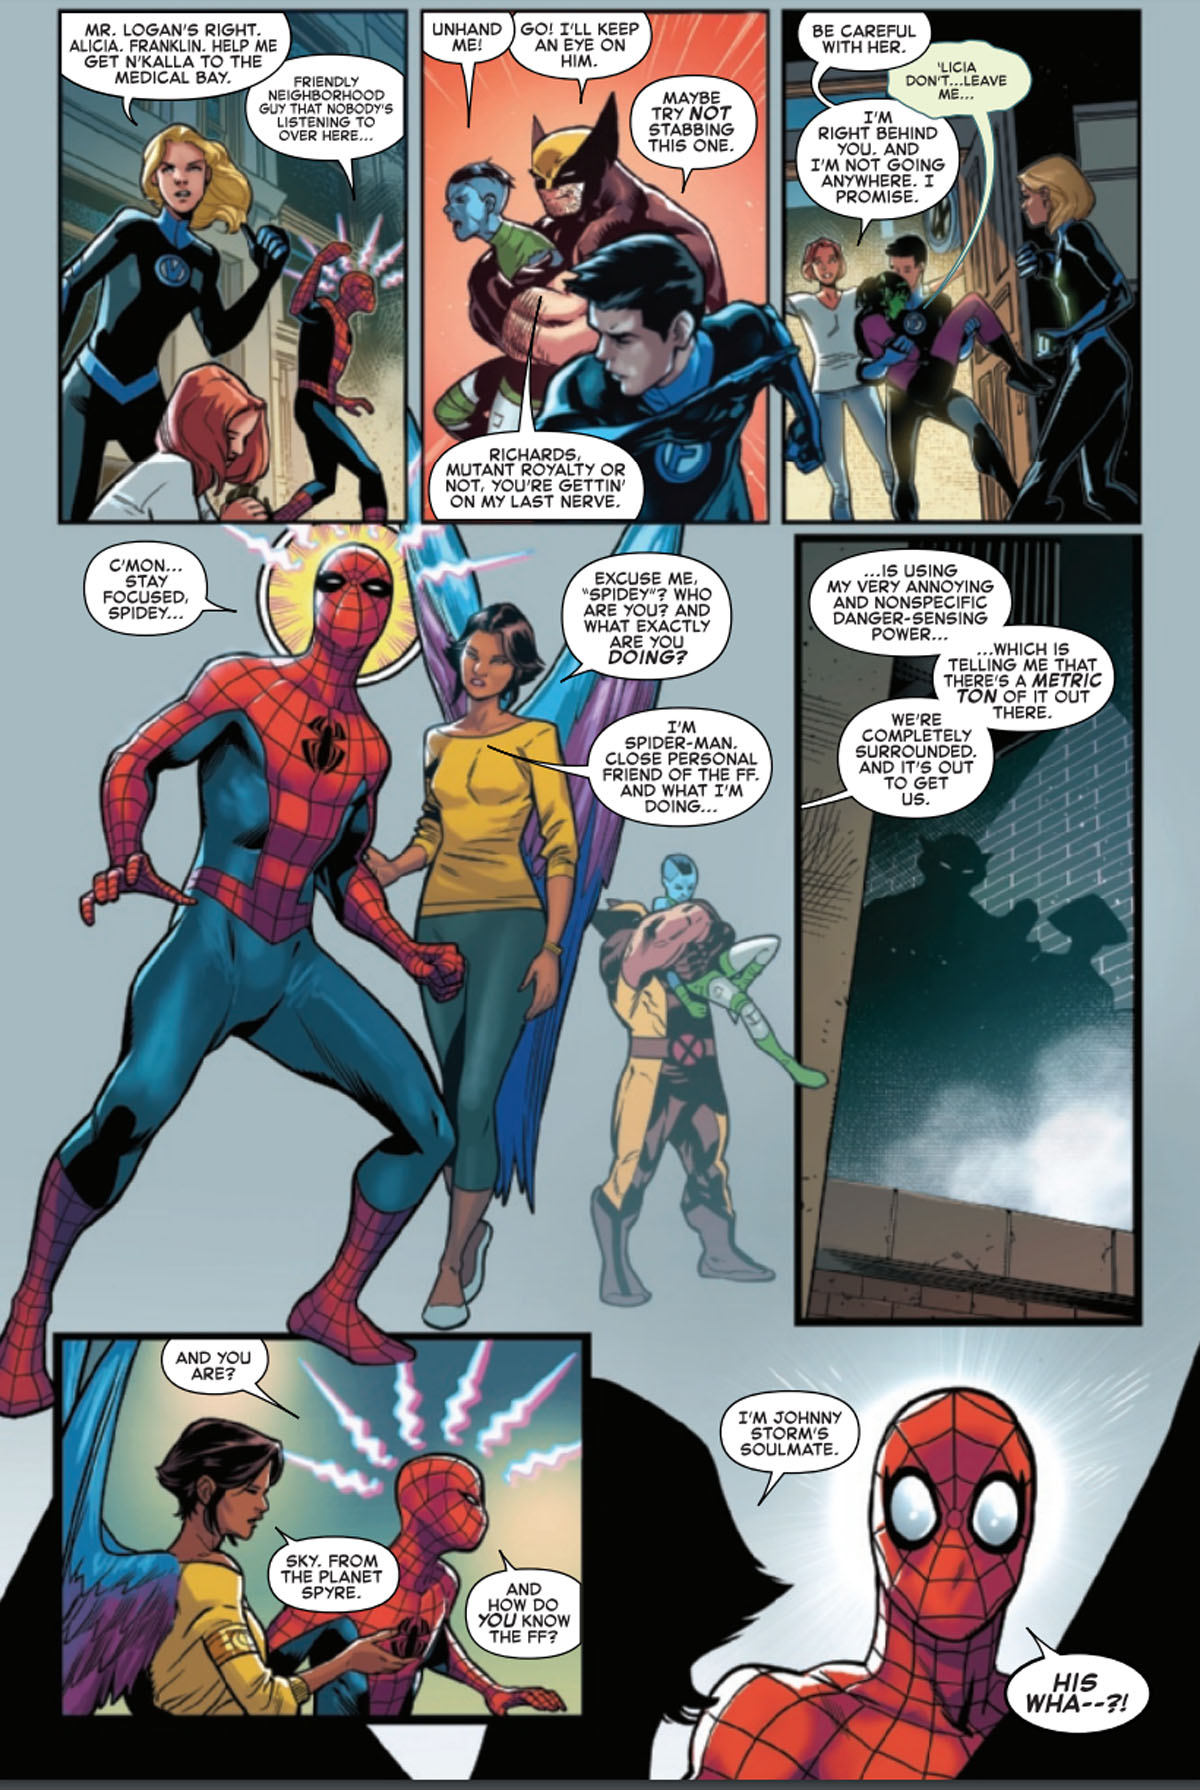 Fantastic Four #22 page 3